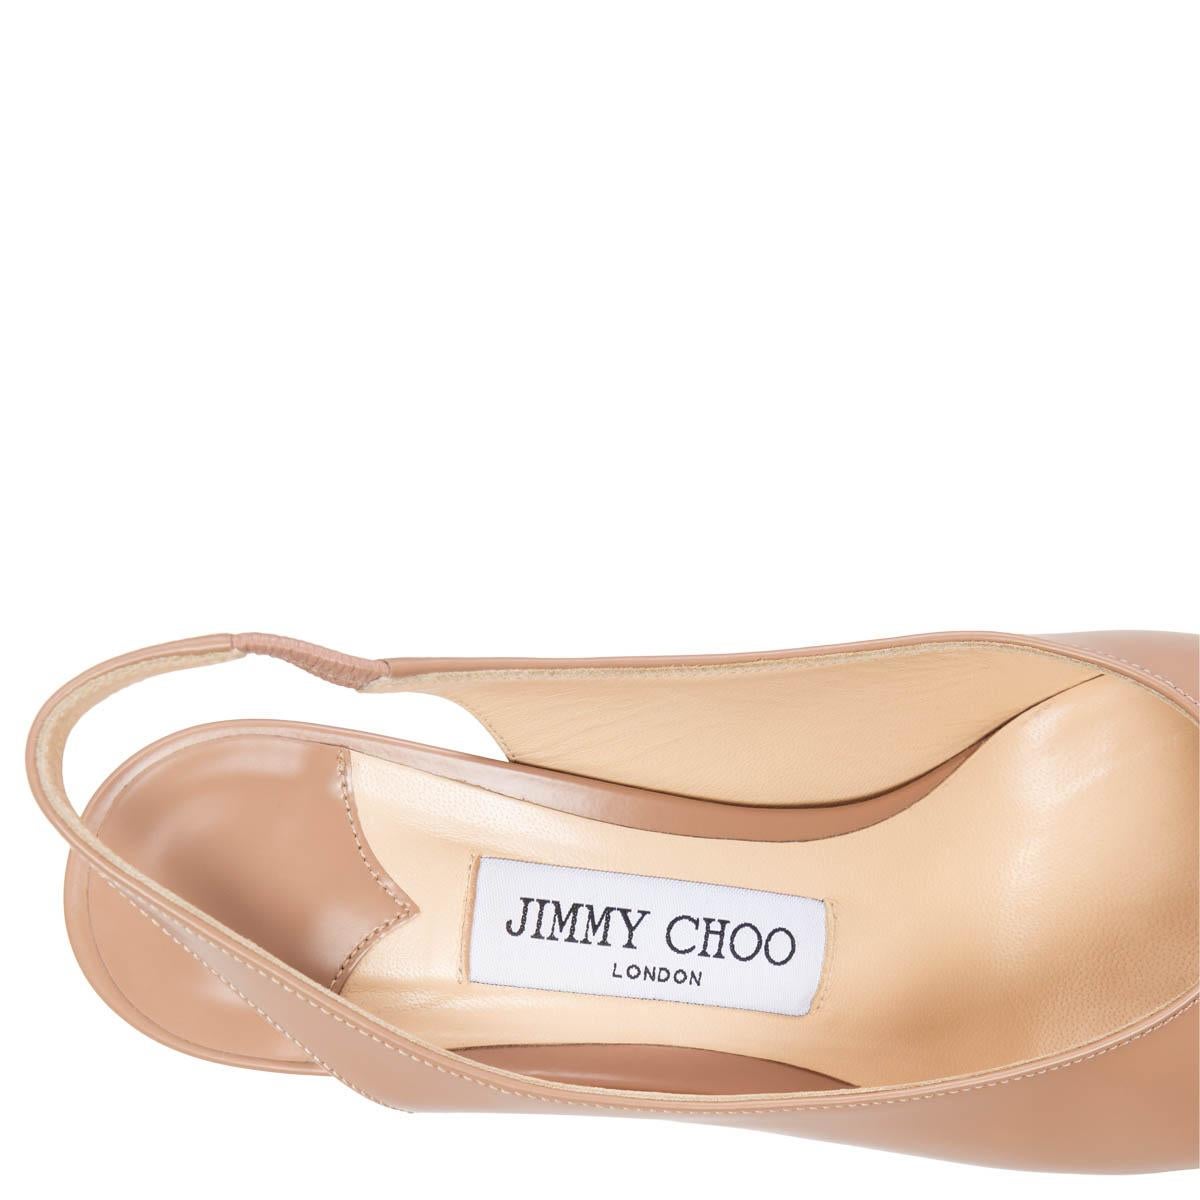 JIMMY CHOO nude leather IVY 85 Slingback Pumps Shoes 37.5 2